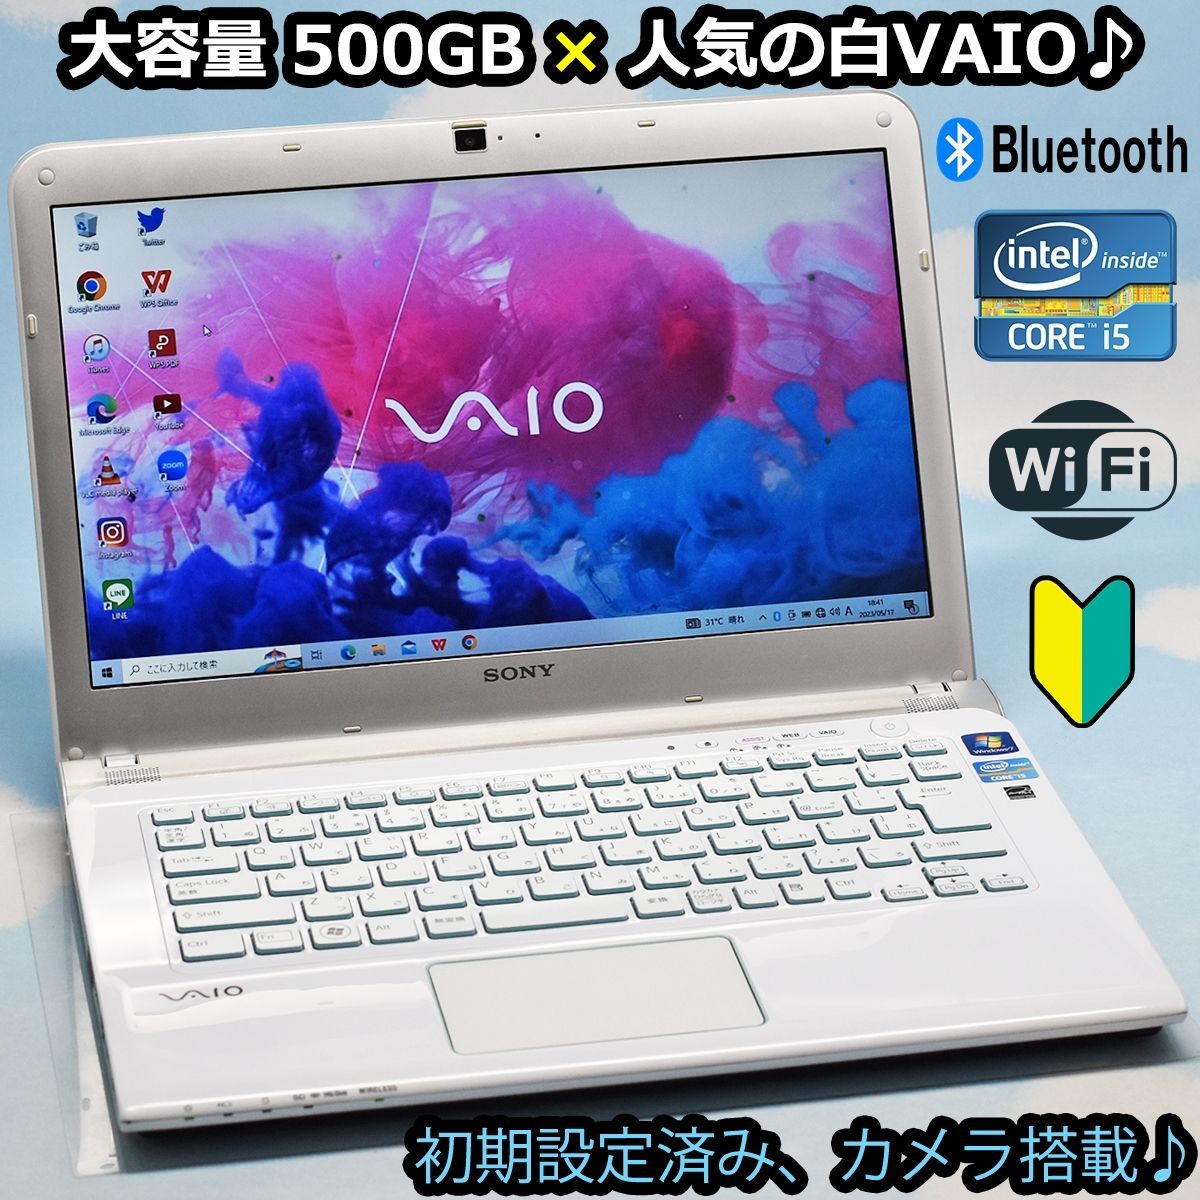 SONY 人気の白VAIO 大容量 500GB HDD Corei5、Bluetooth、カメラ